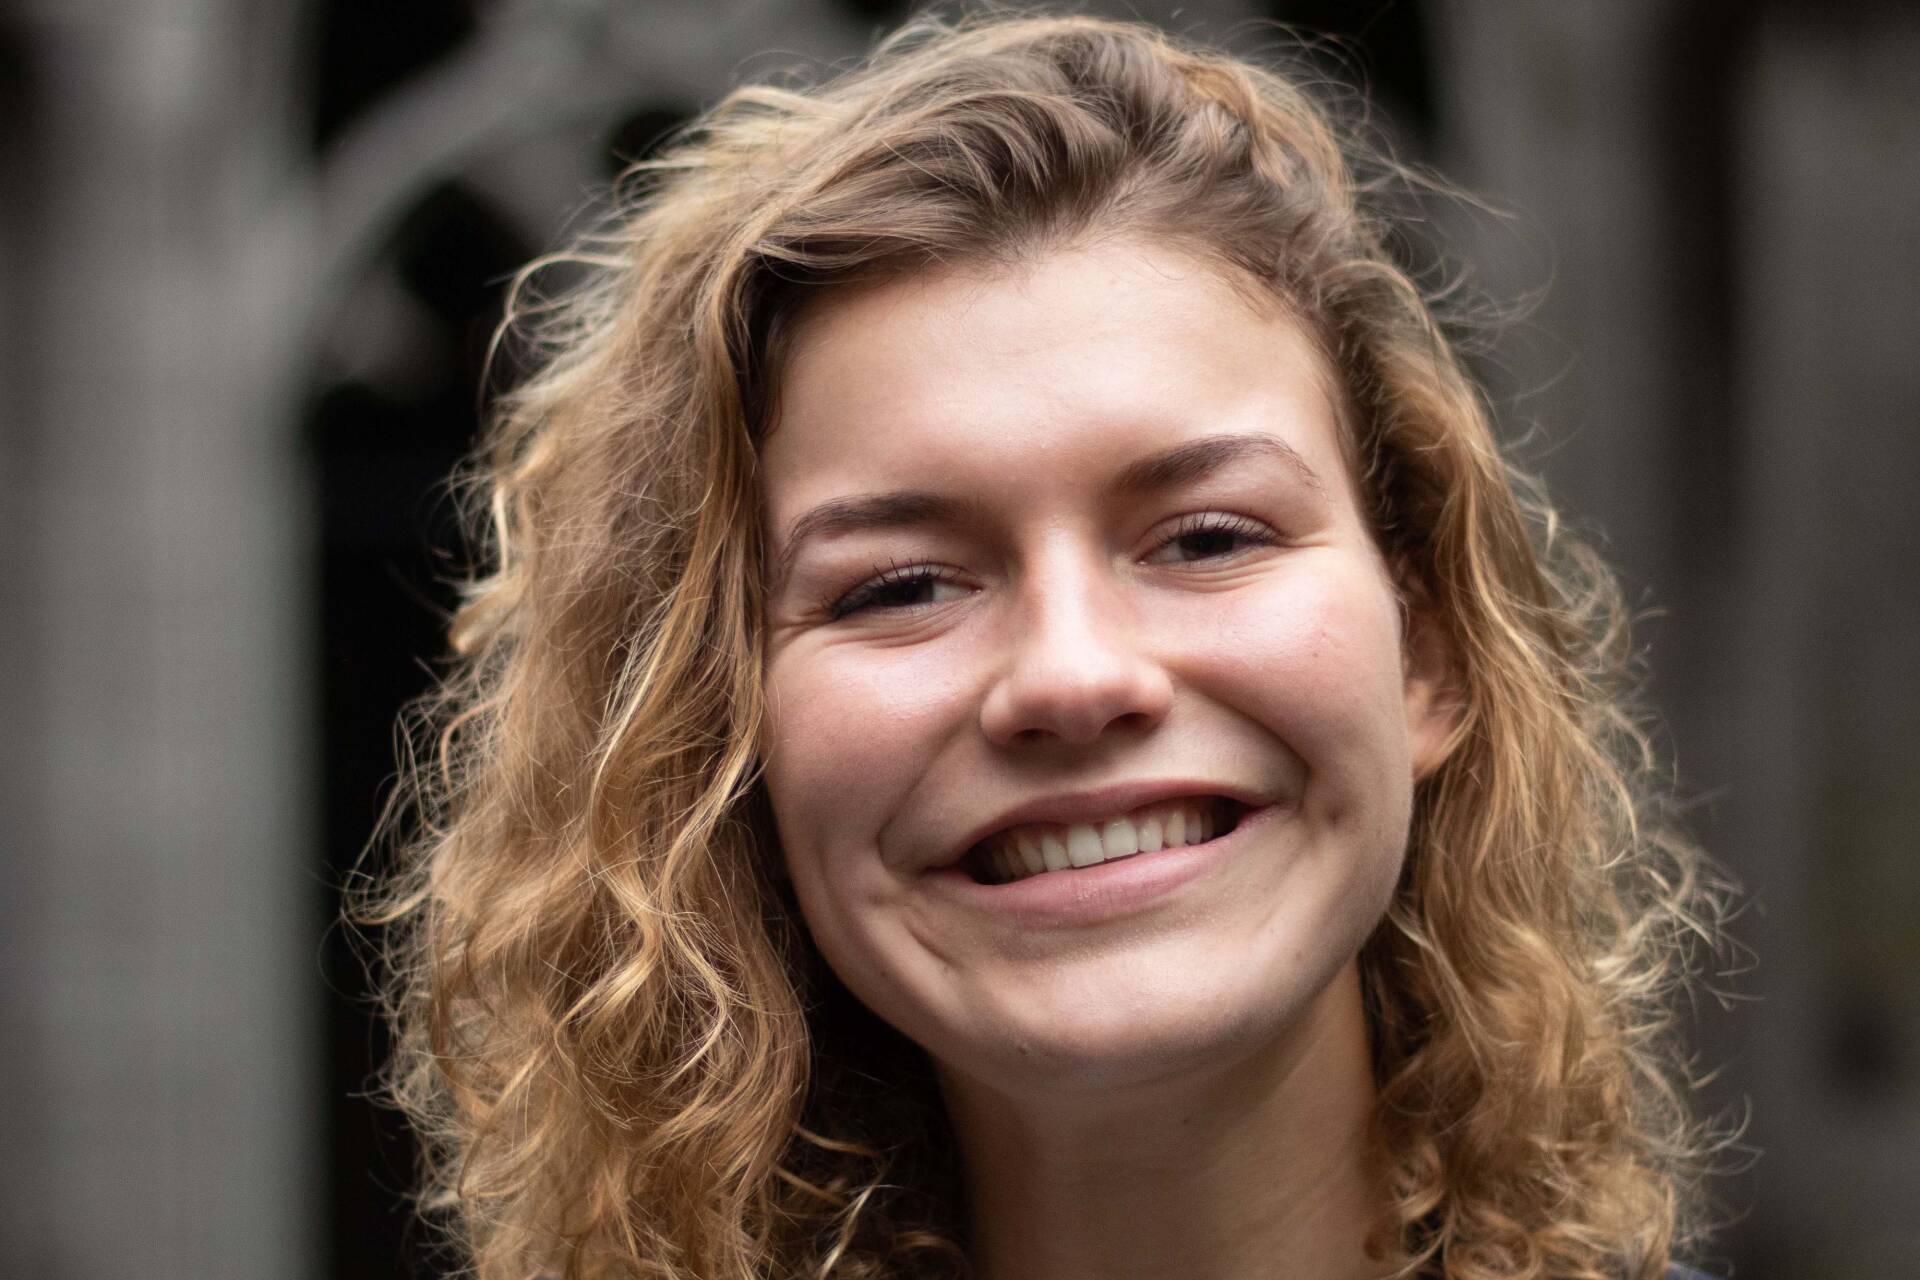 Portrait image of Maartje smiling